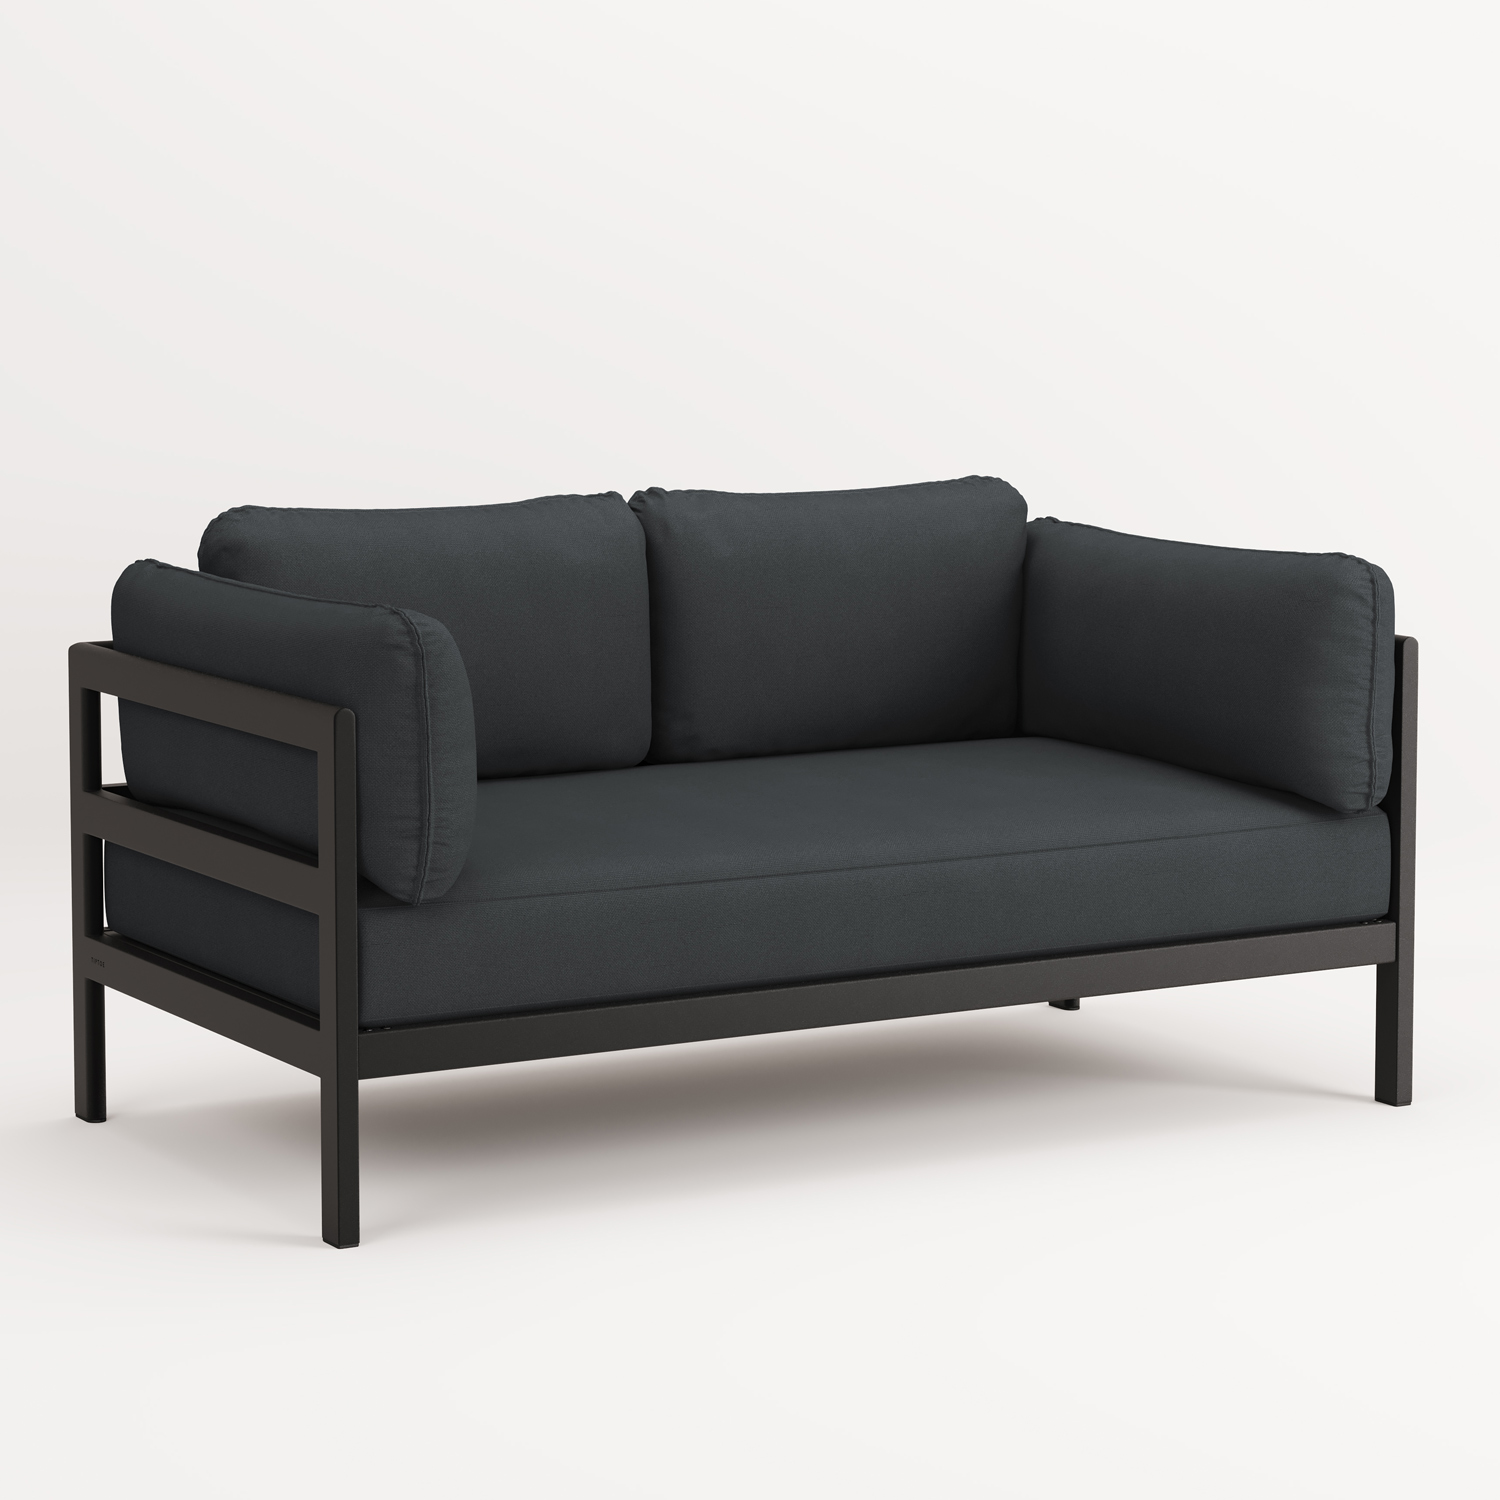 EASY sofa – 2 seats